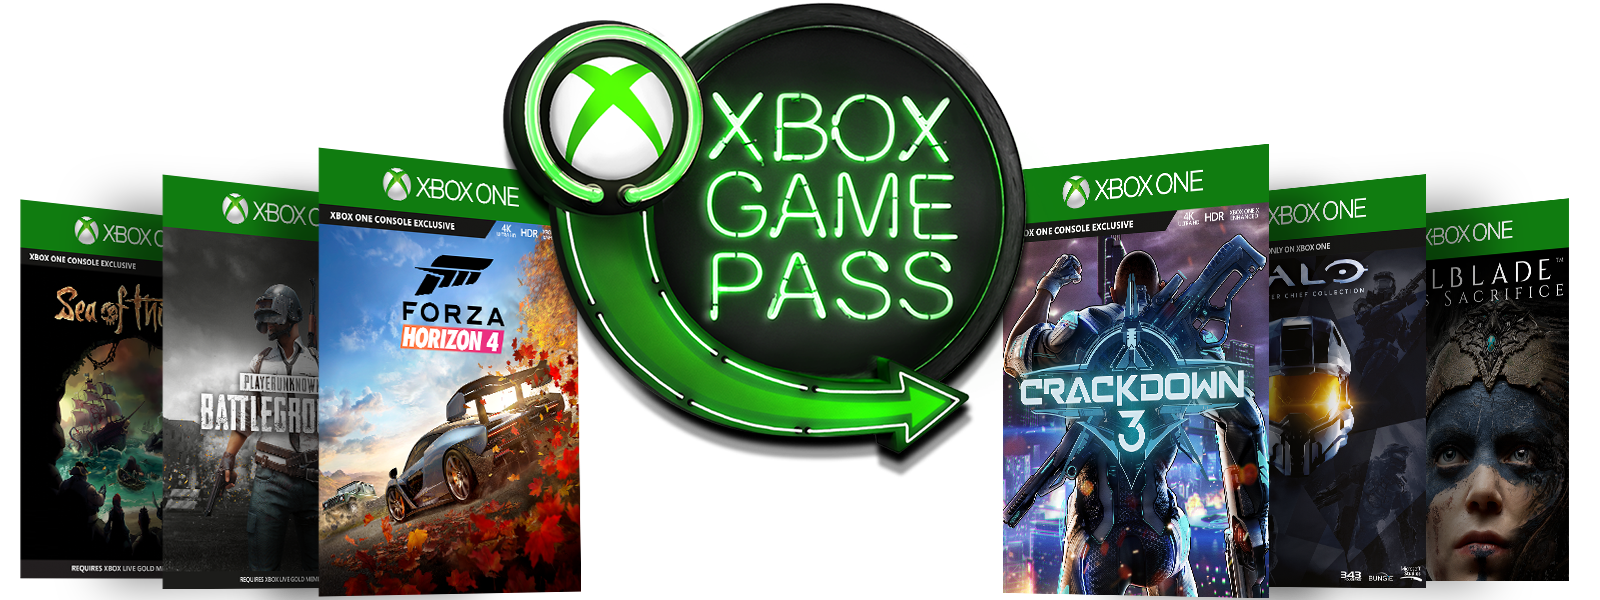 Купить икс бокс пасс. Xbox Ultimate. Икс бокс гейм пасс приставка. Xbox game Pass Ultimate. Подписка ультимейт для Xbox.